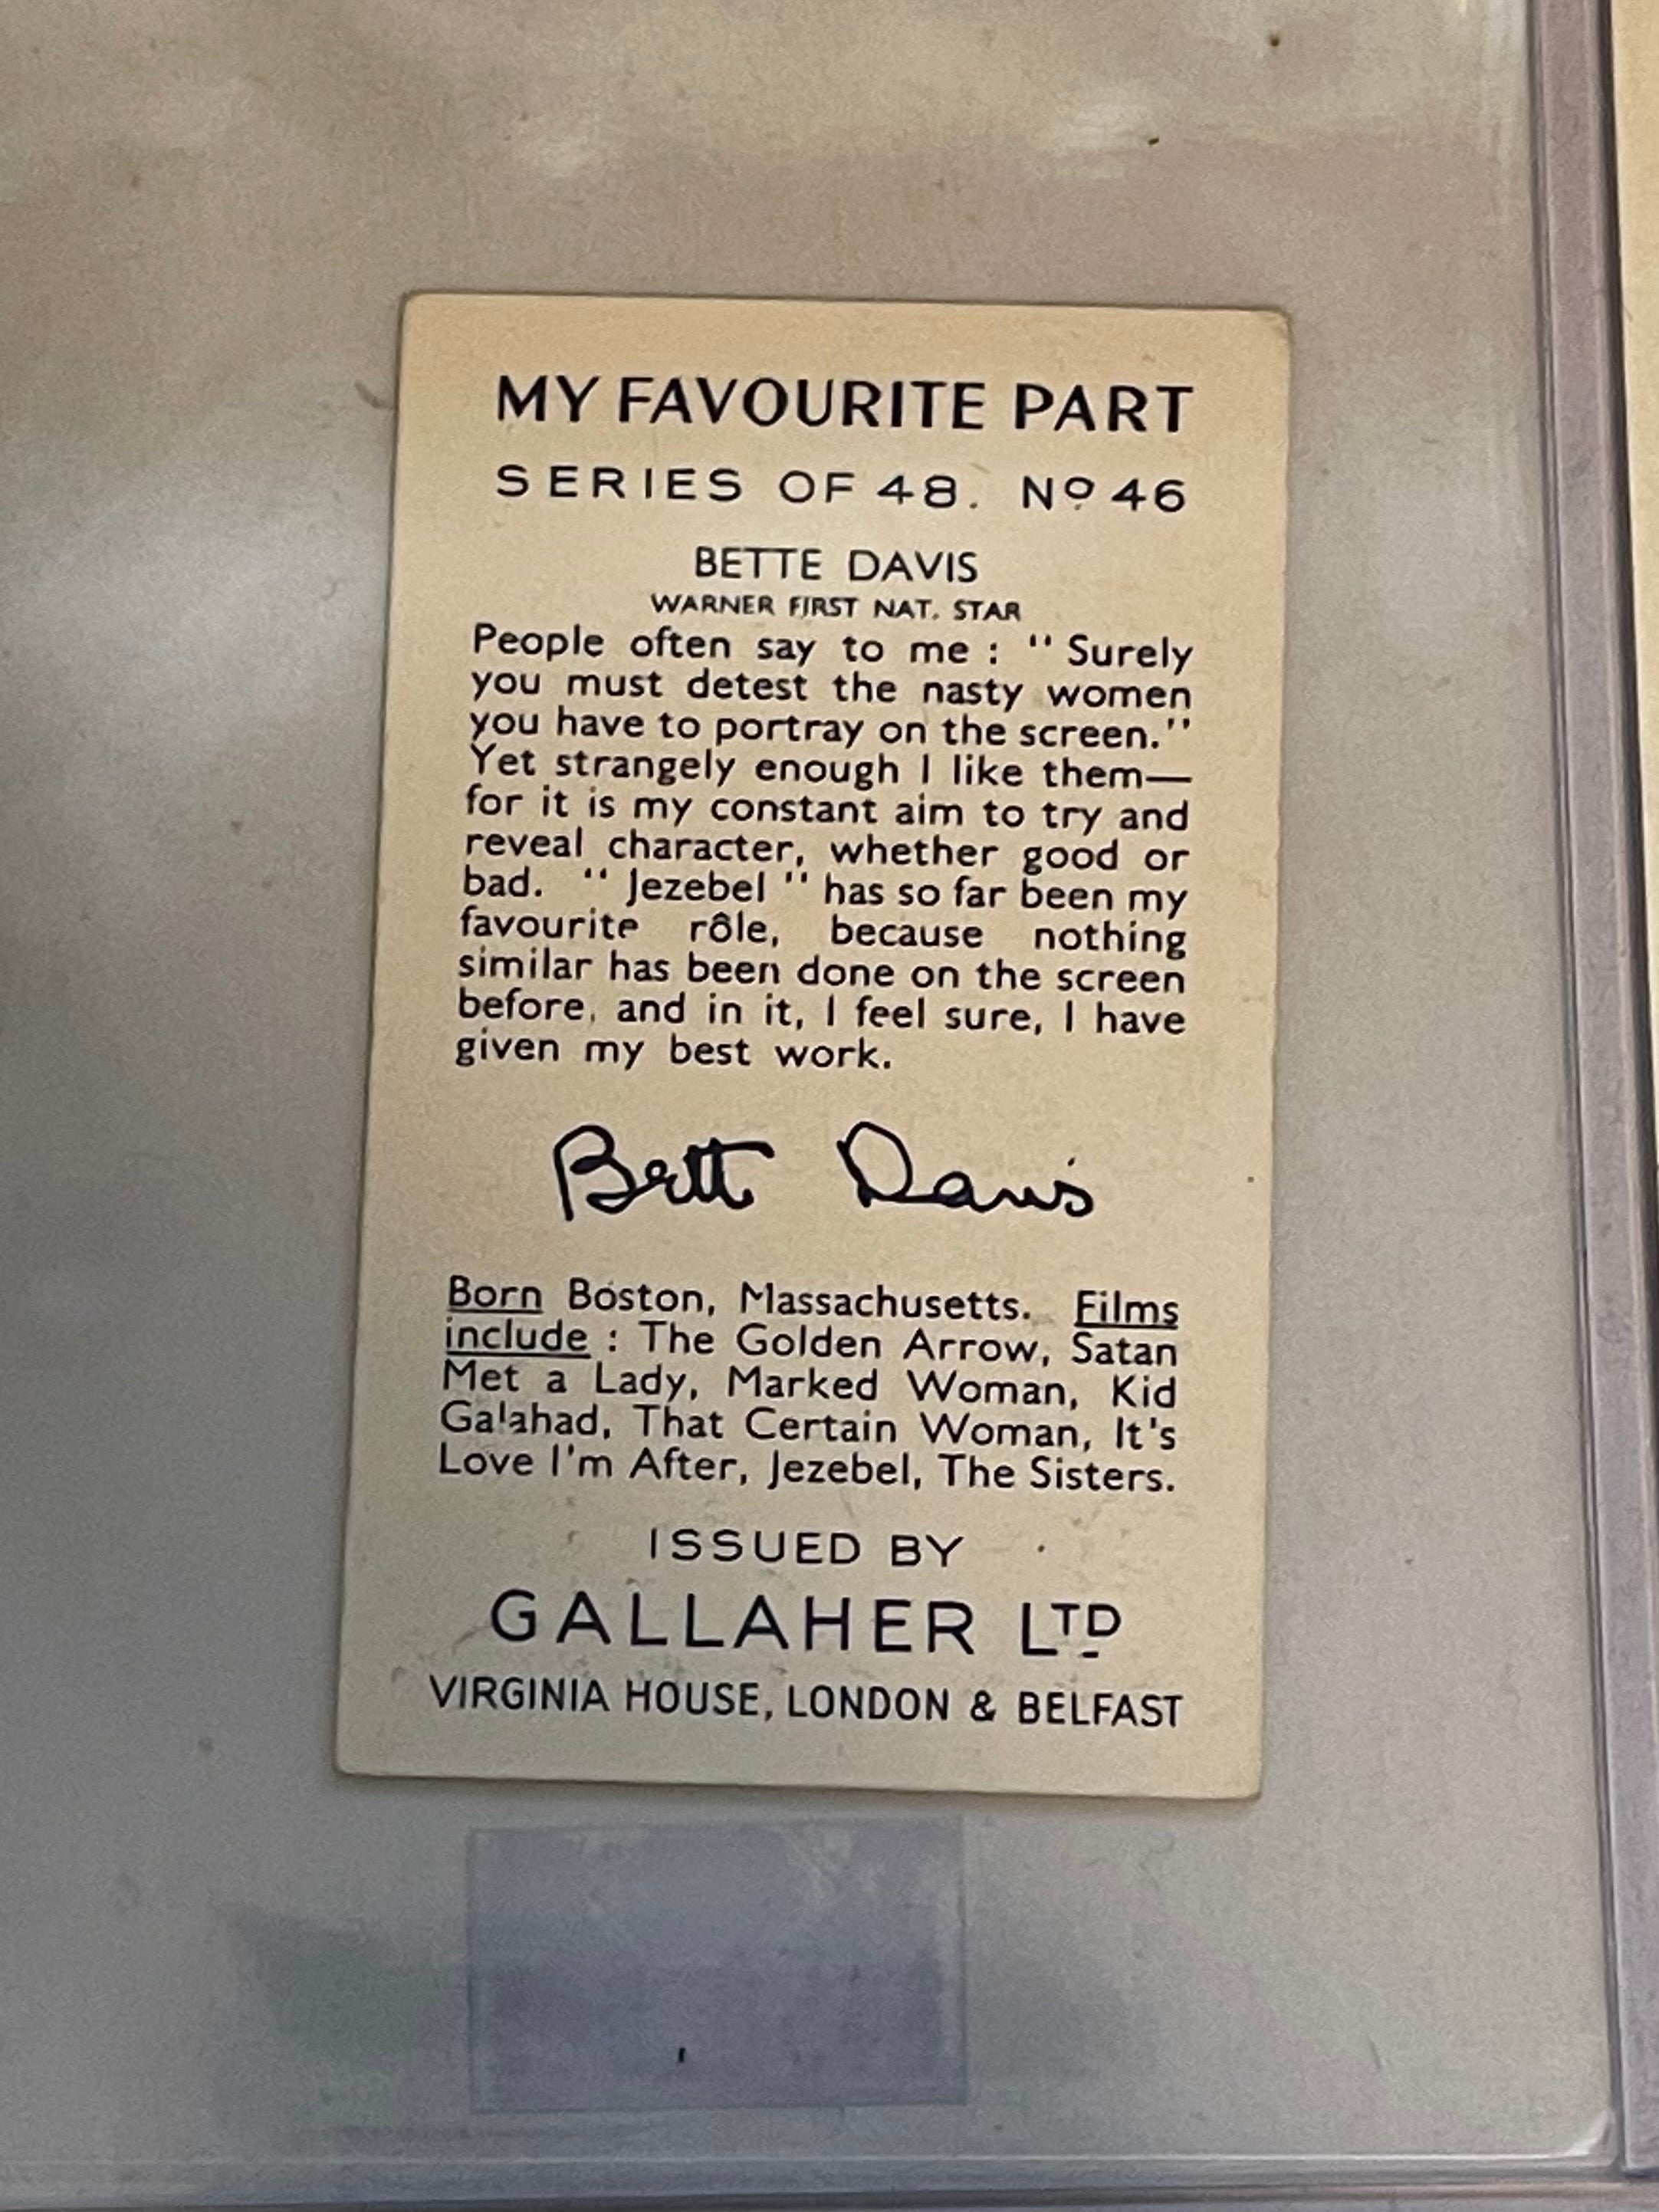 Bette Davis movie star rare Tabacco card from 1935